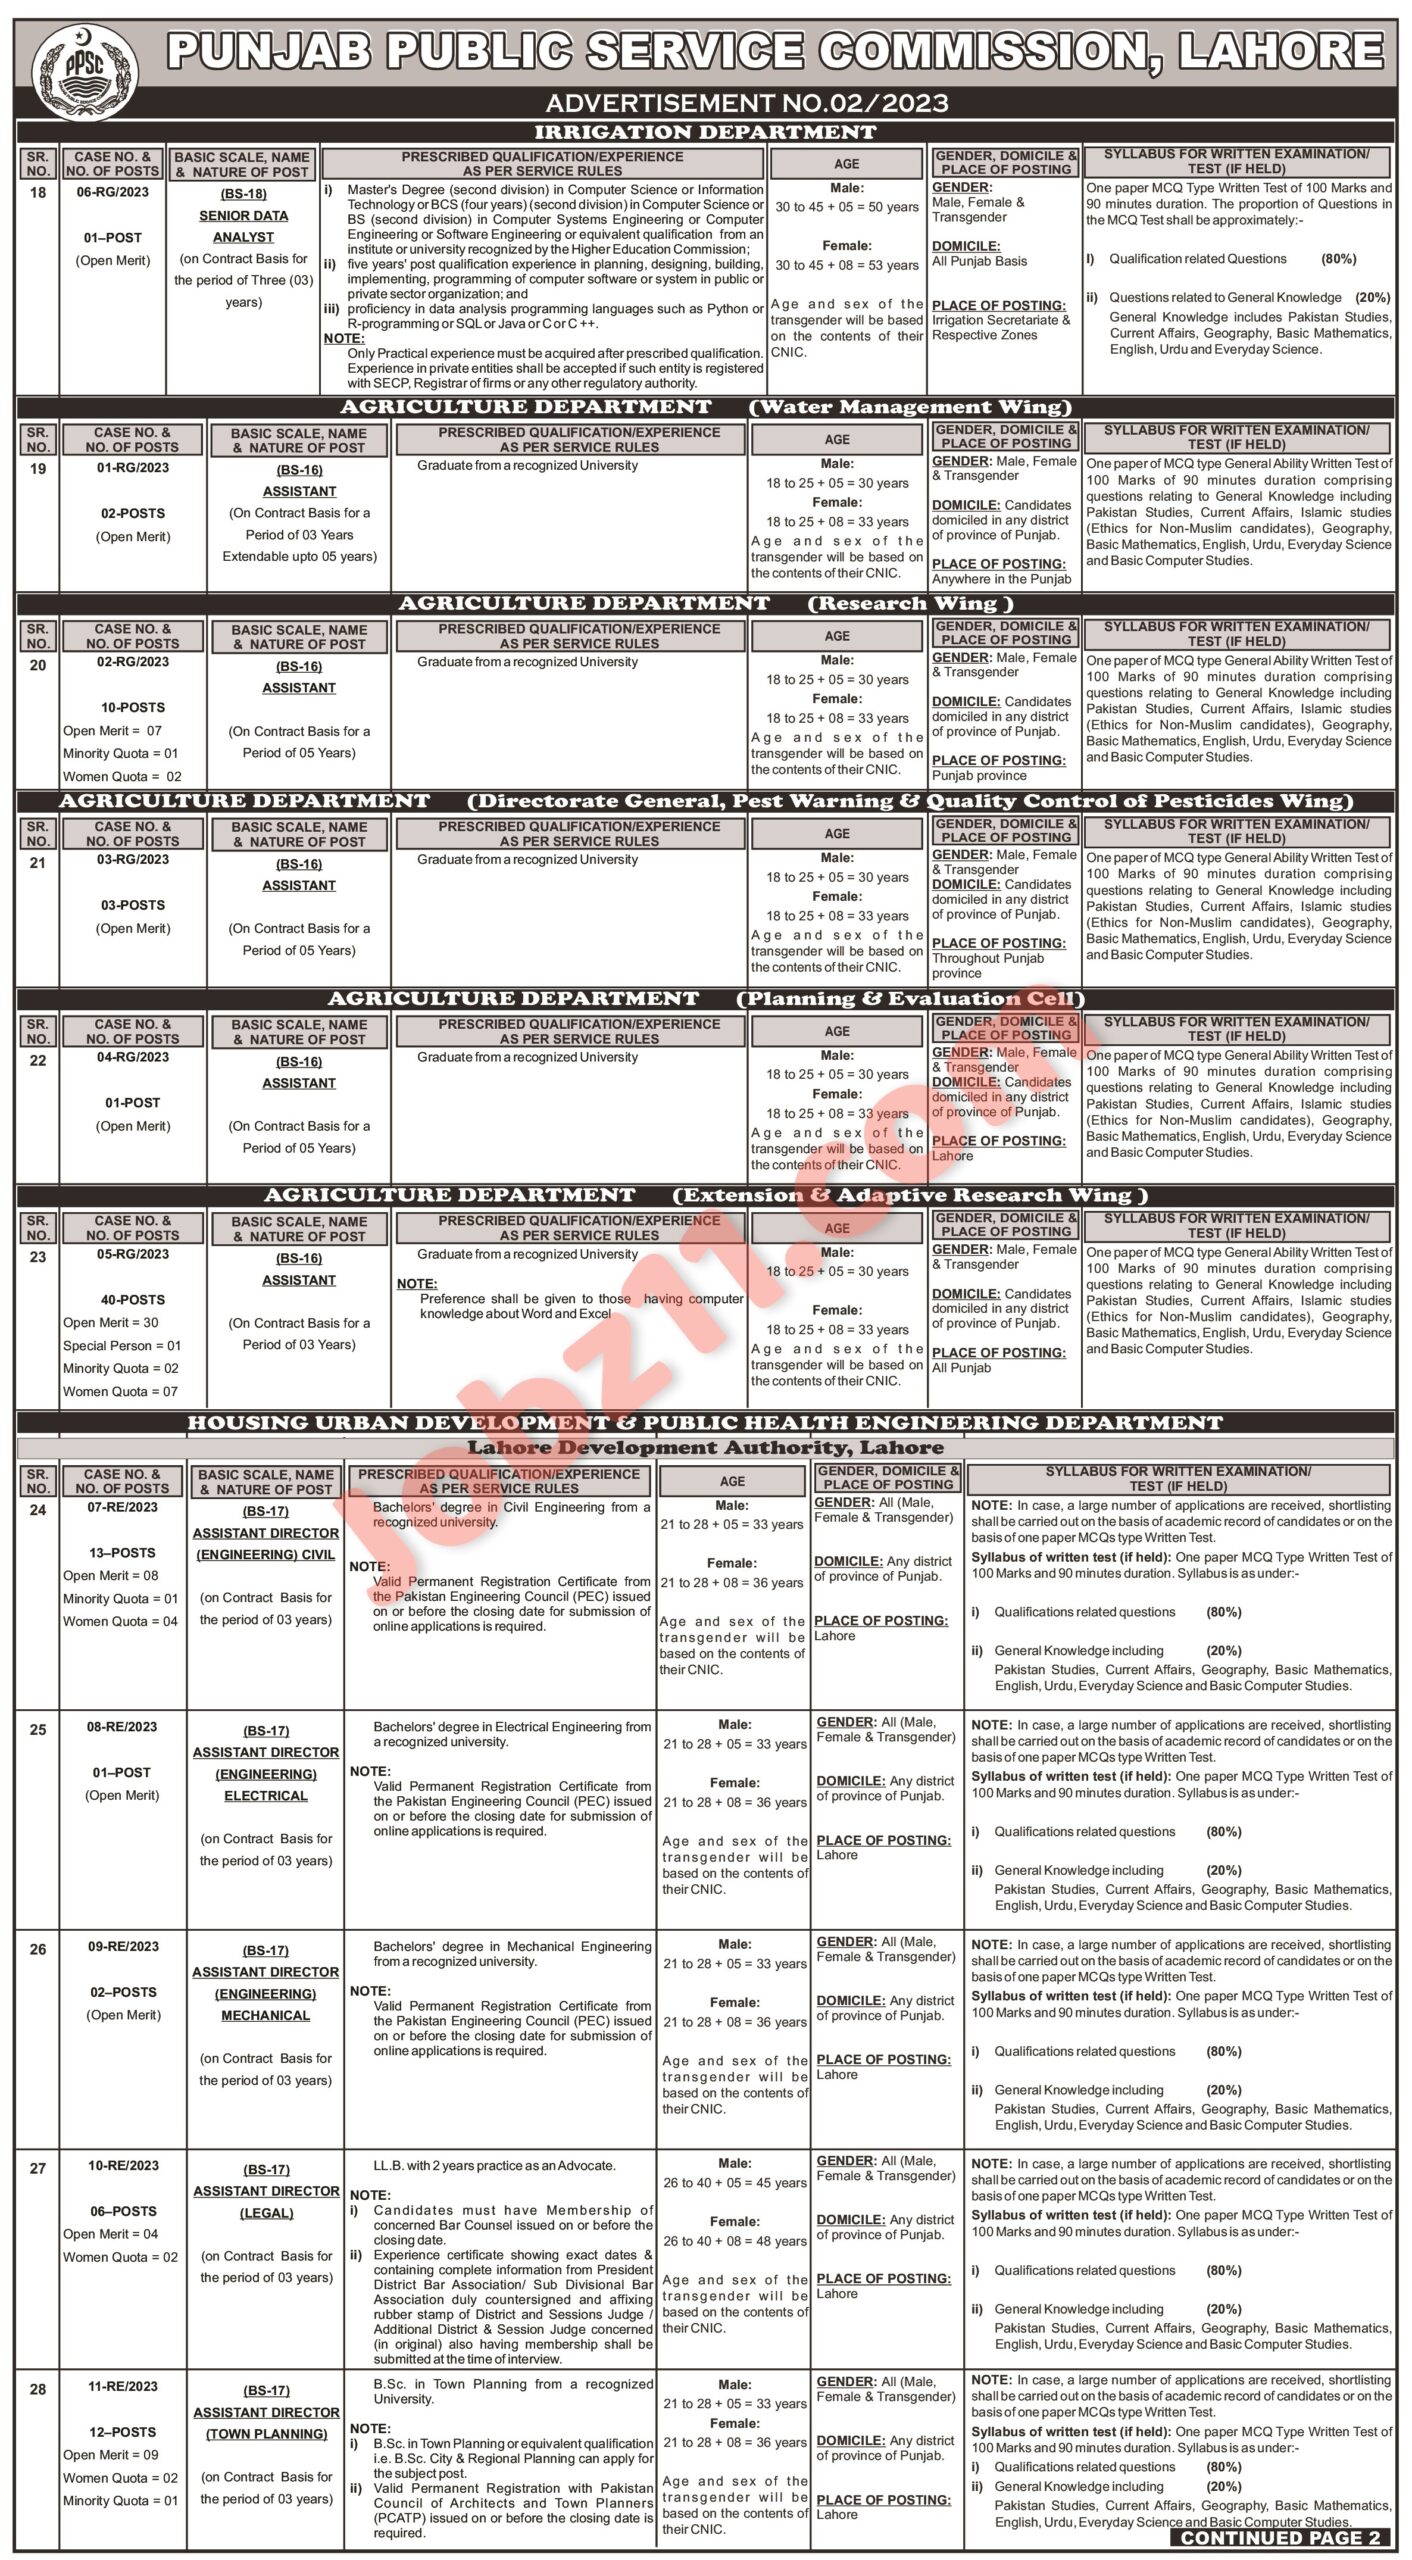 PPSC Jobs 2023 Advertisement No 2 Govt of Punjab Jobs ppsc.gop.pk